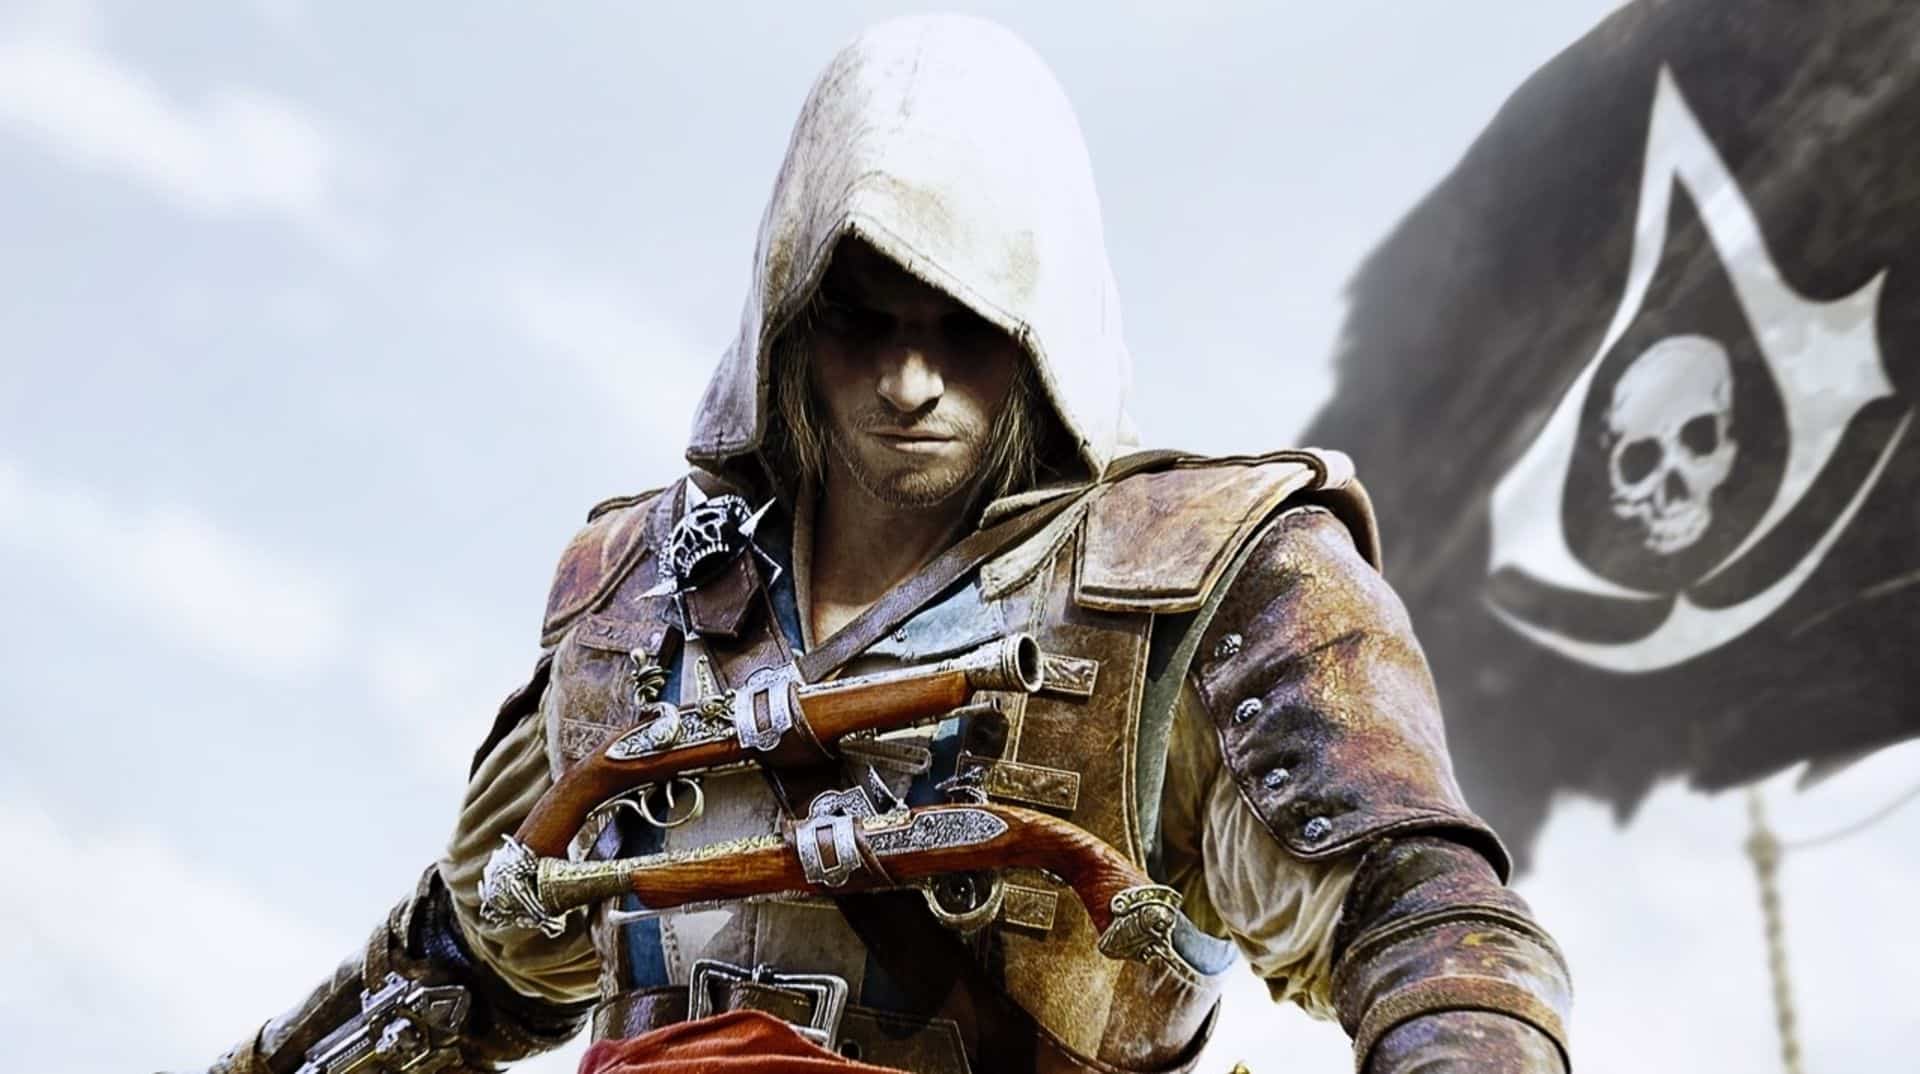 L'assassin du jeu Assassin's Creed se tient devant un drapeau pirate.